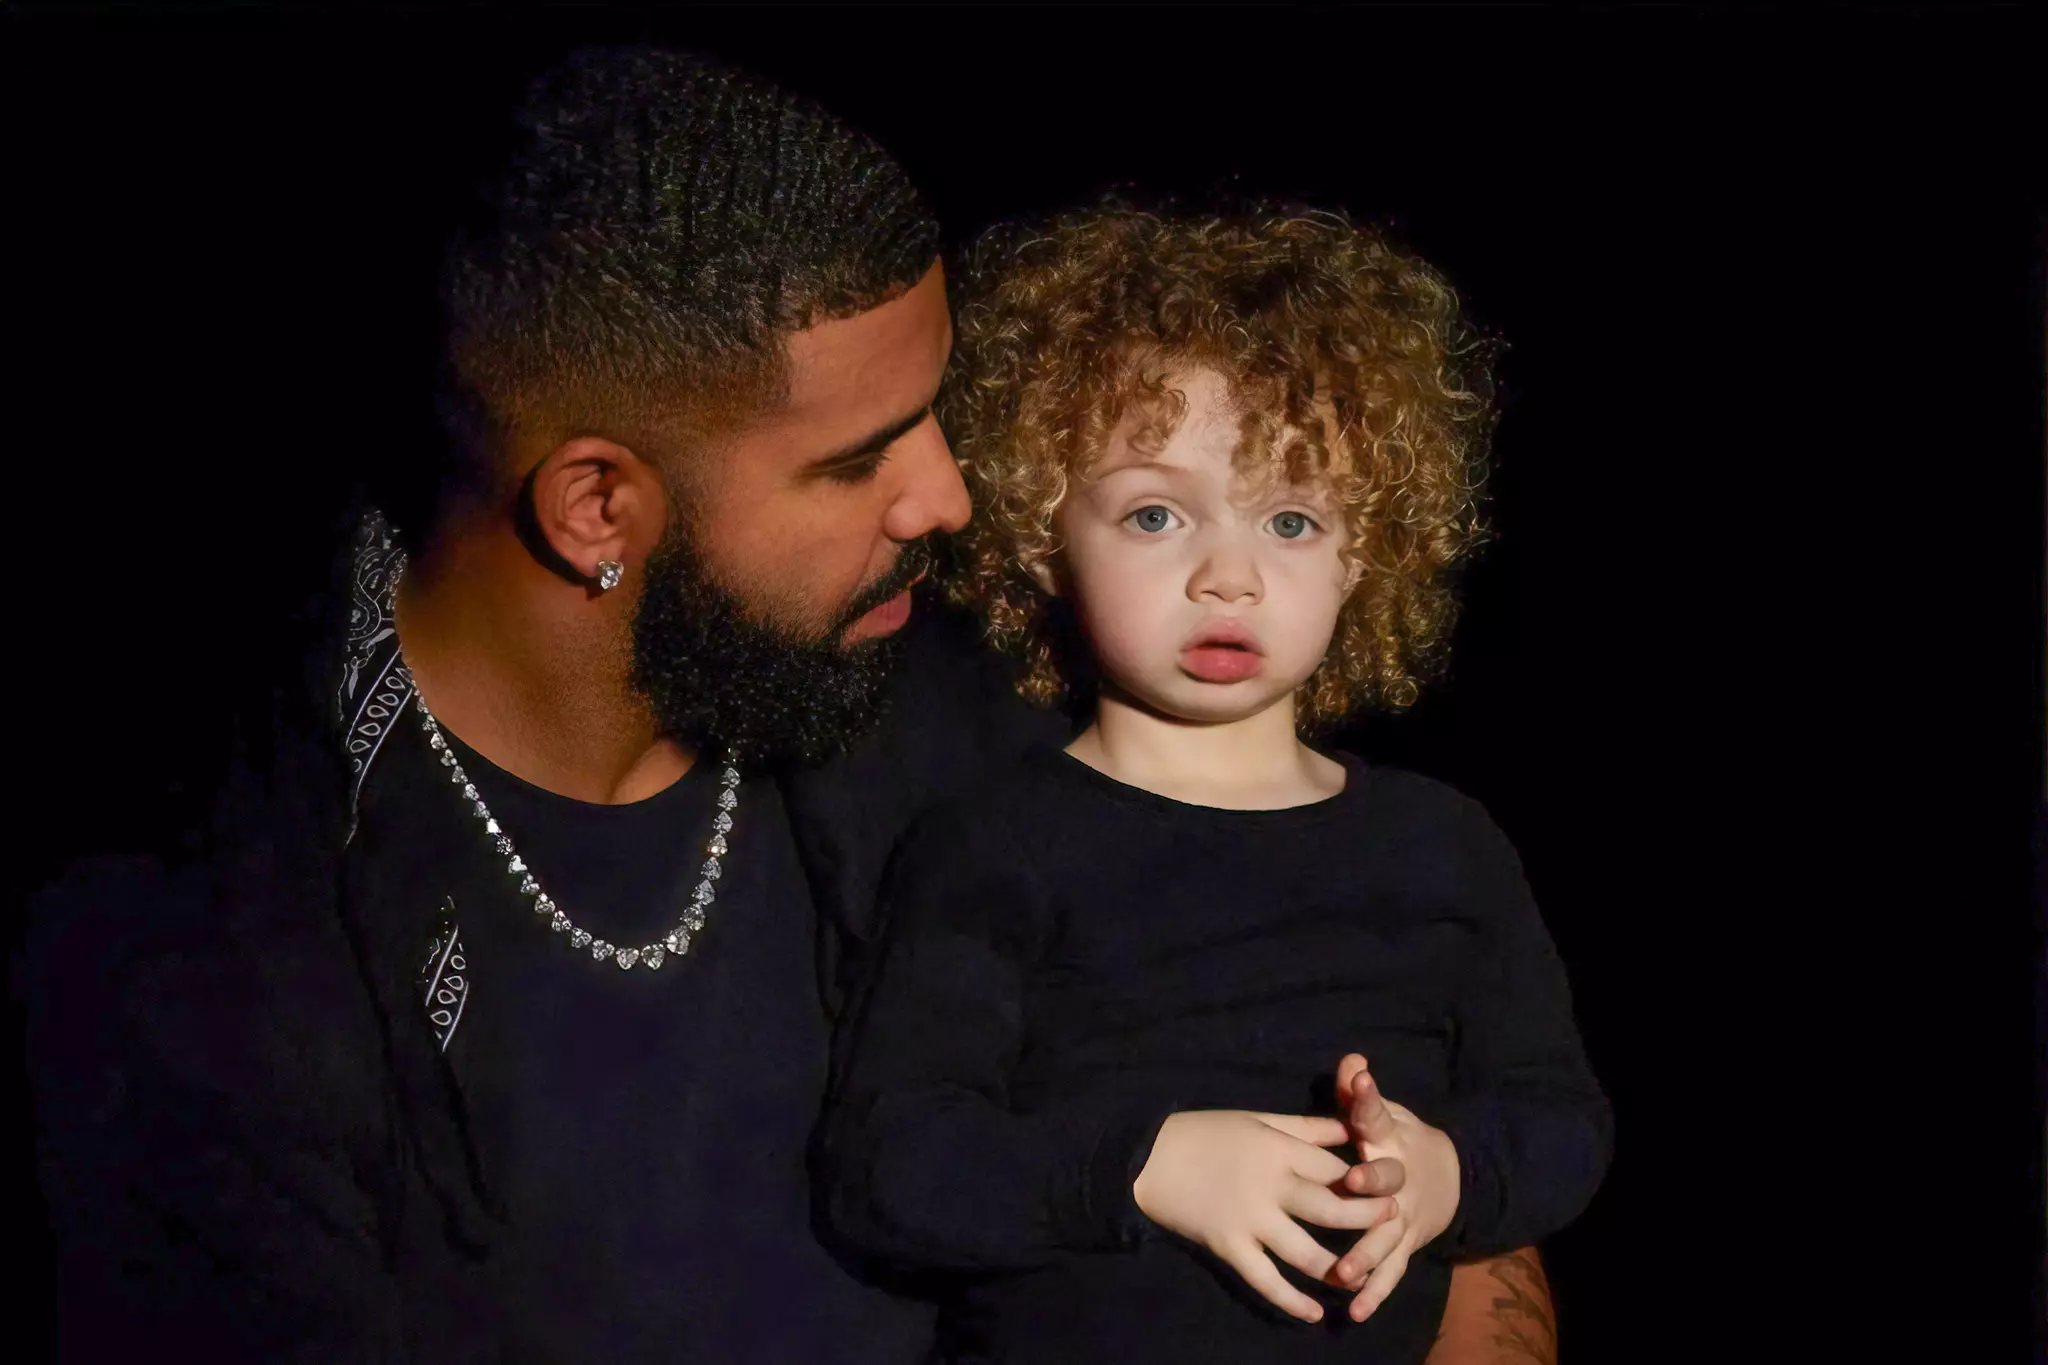 O Drake δημοσίευσε για πρώτη φορά φωτογραφία του δίχρονου γιου του με το αρχαιοελληνικό όνομα